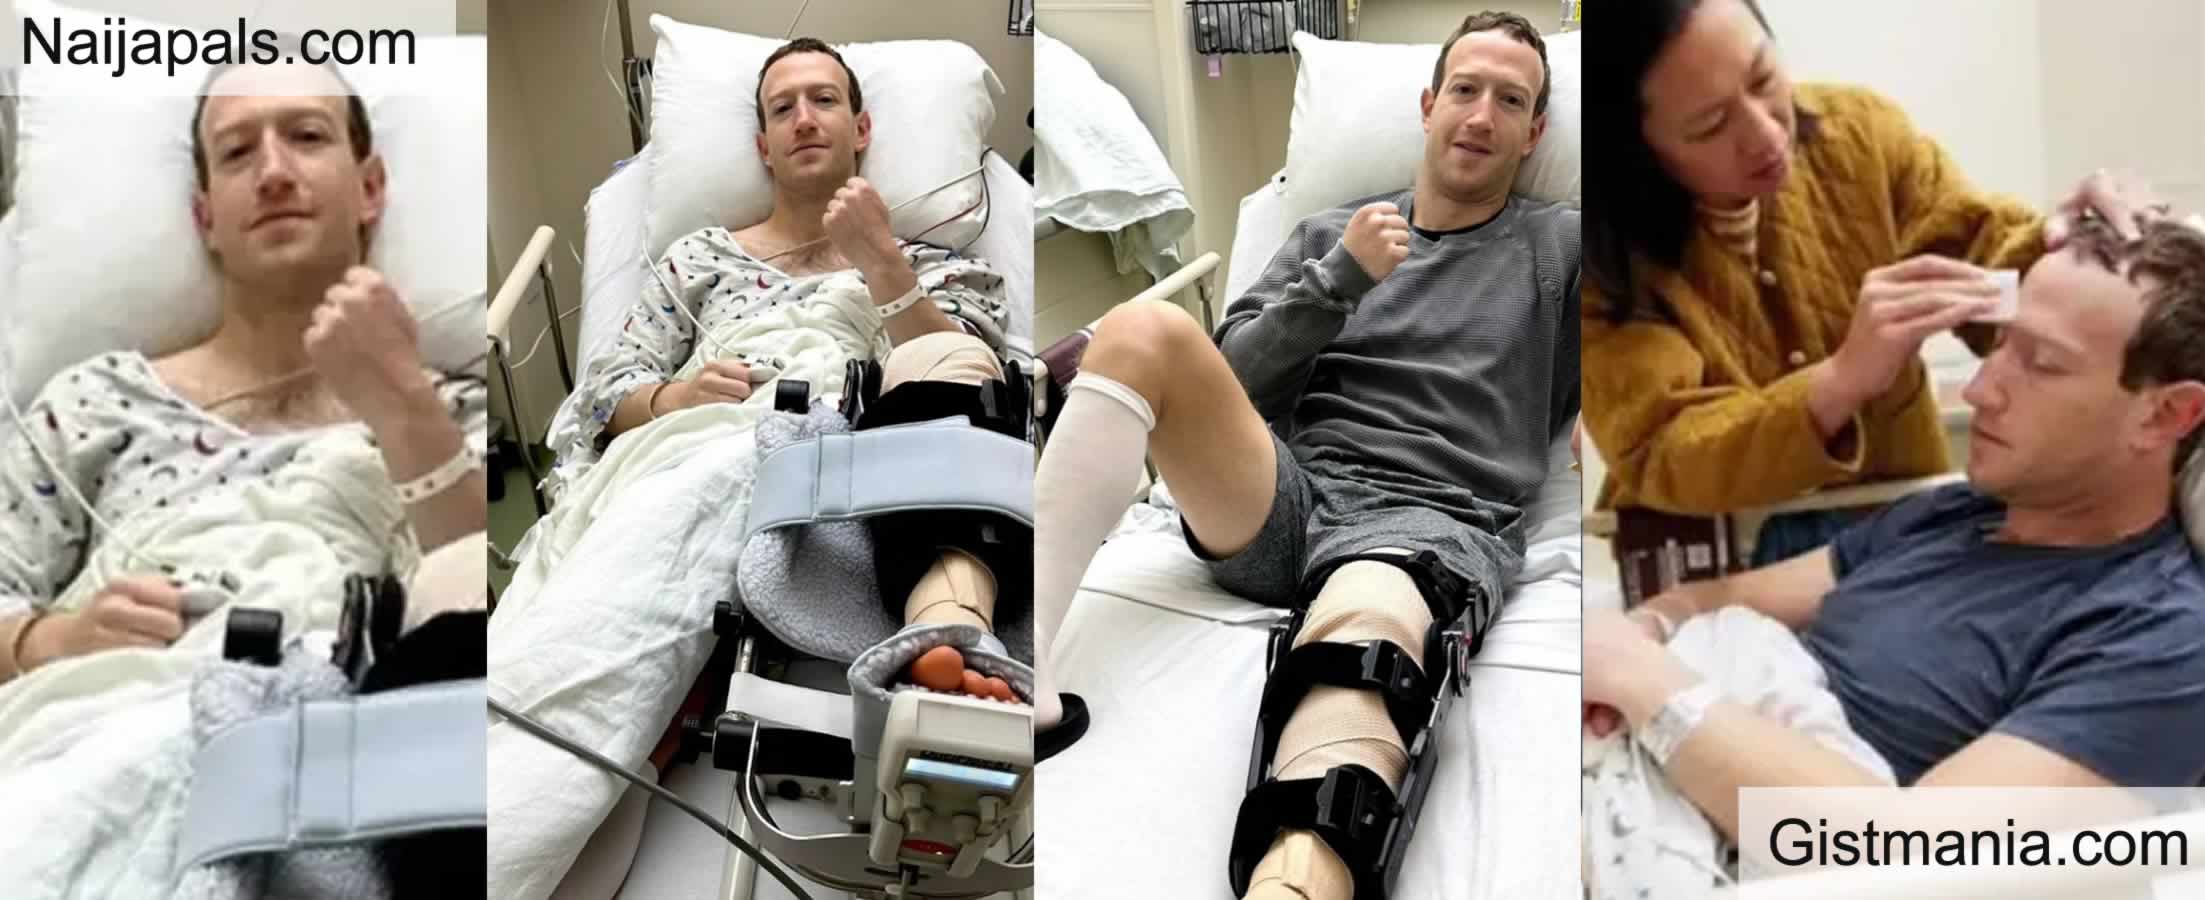 Mark Zuckerberg Undergoes Surgery For Knee Injury, Shares Pics On Instagram